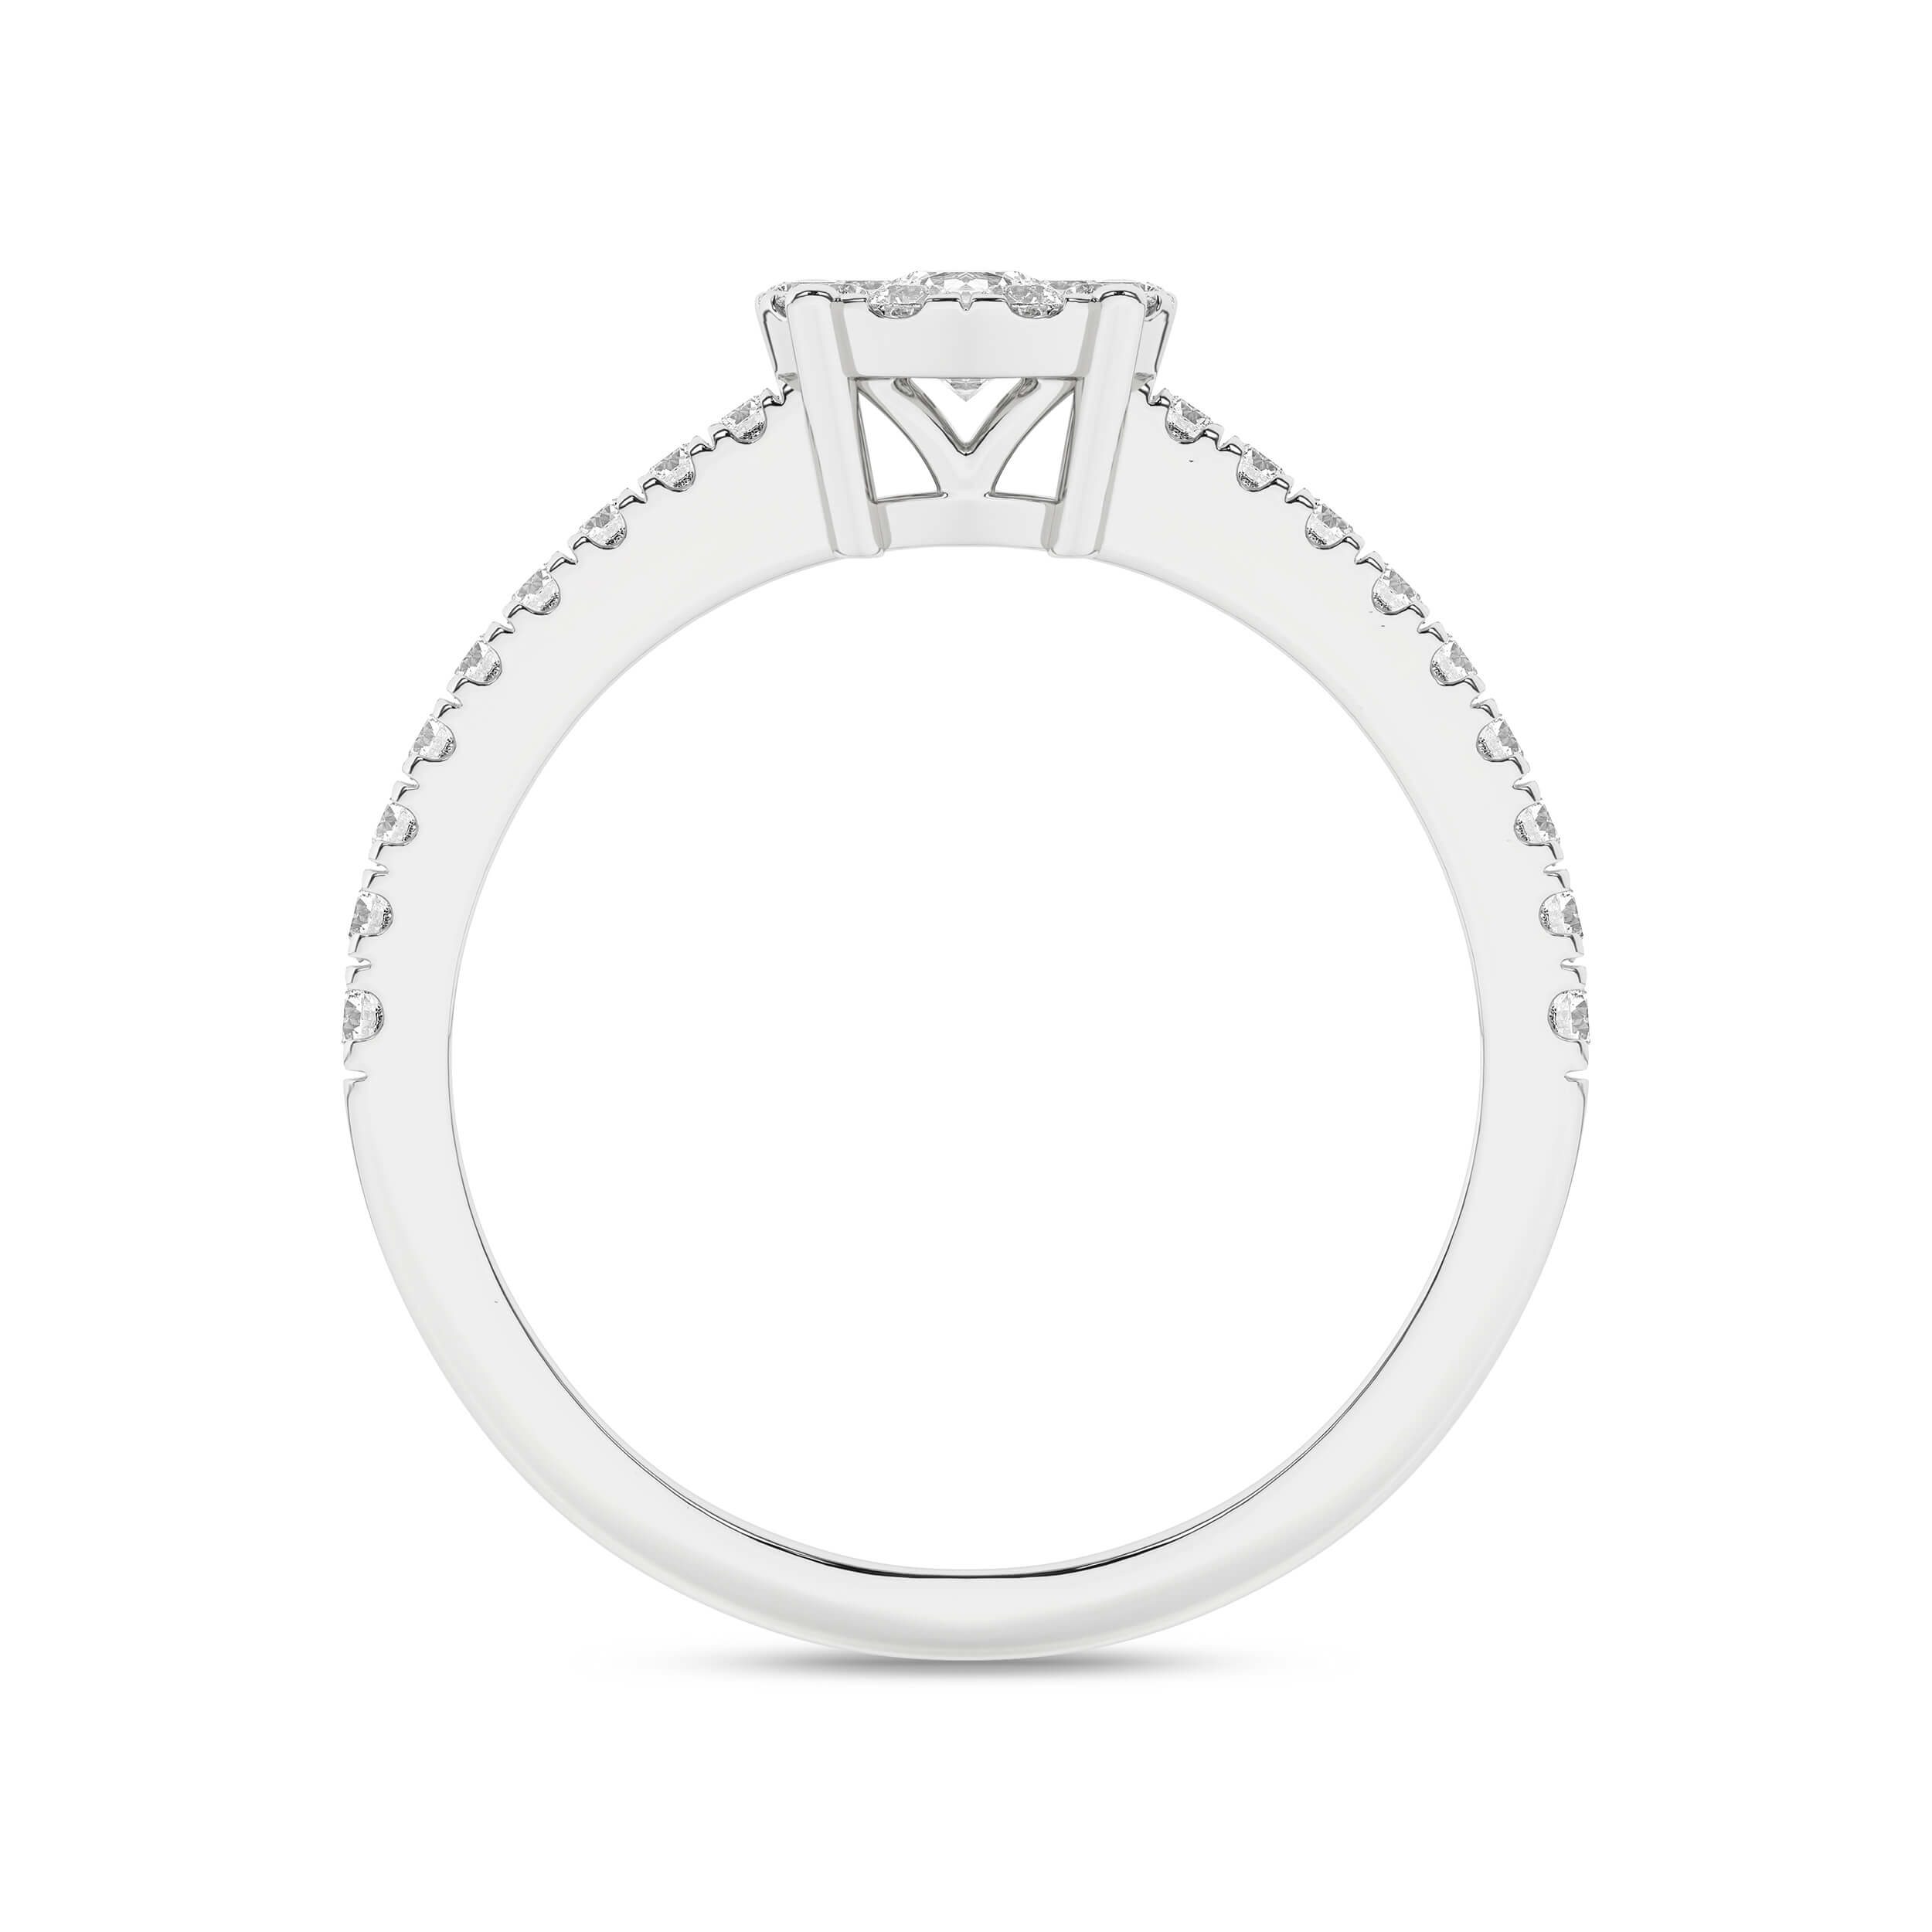 Inel de logodna din Aur Alb 14K cu Diamante 0.40Ct, articol RC4052, previzualizare foto 3